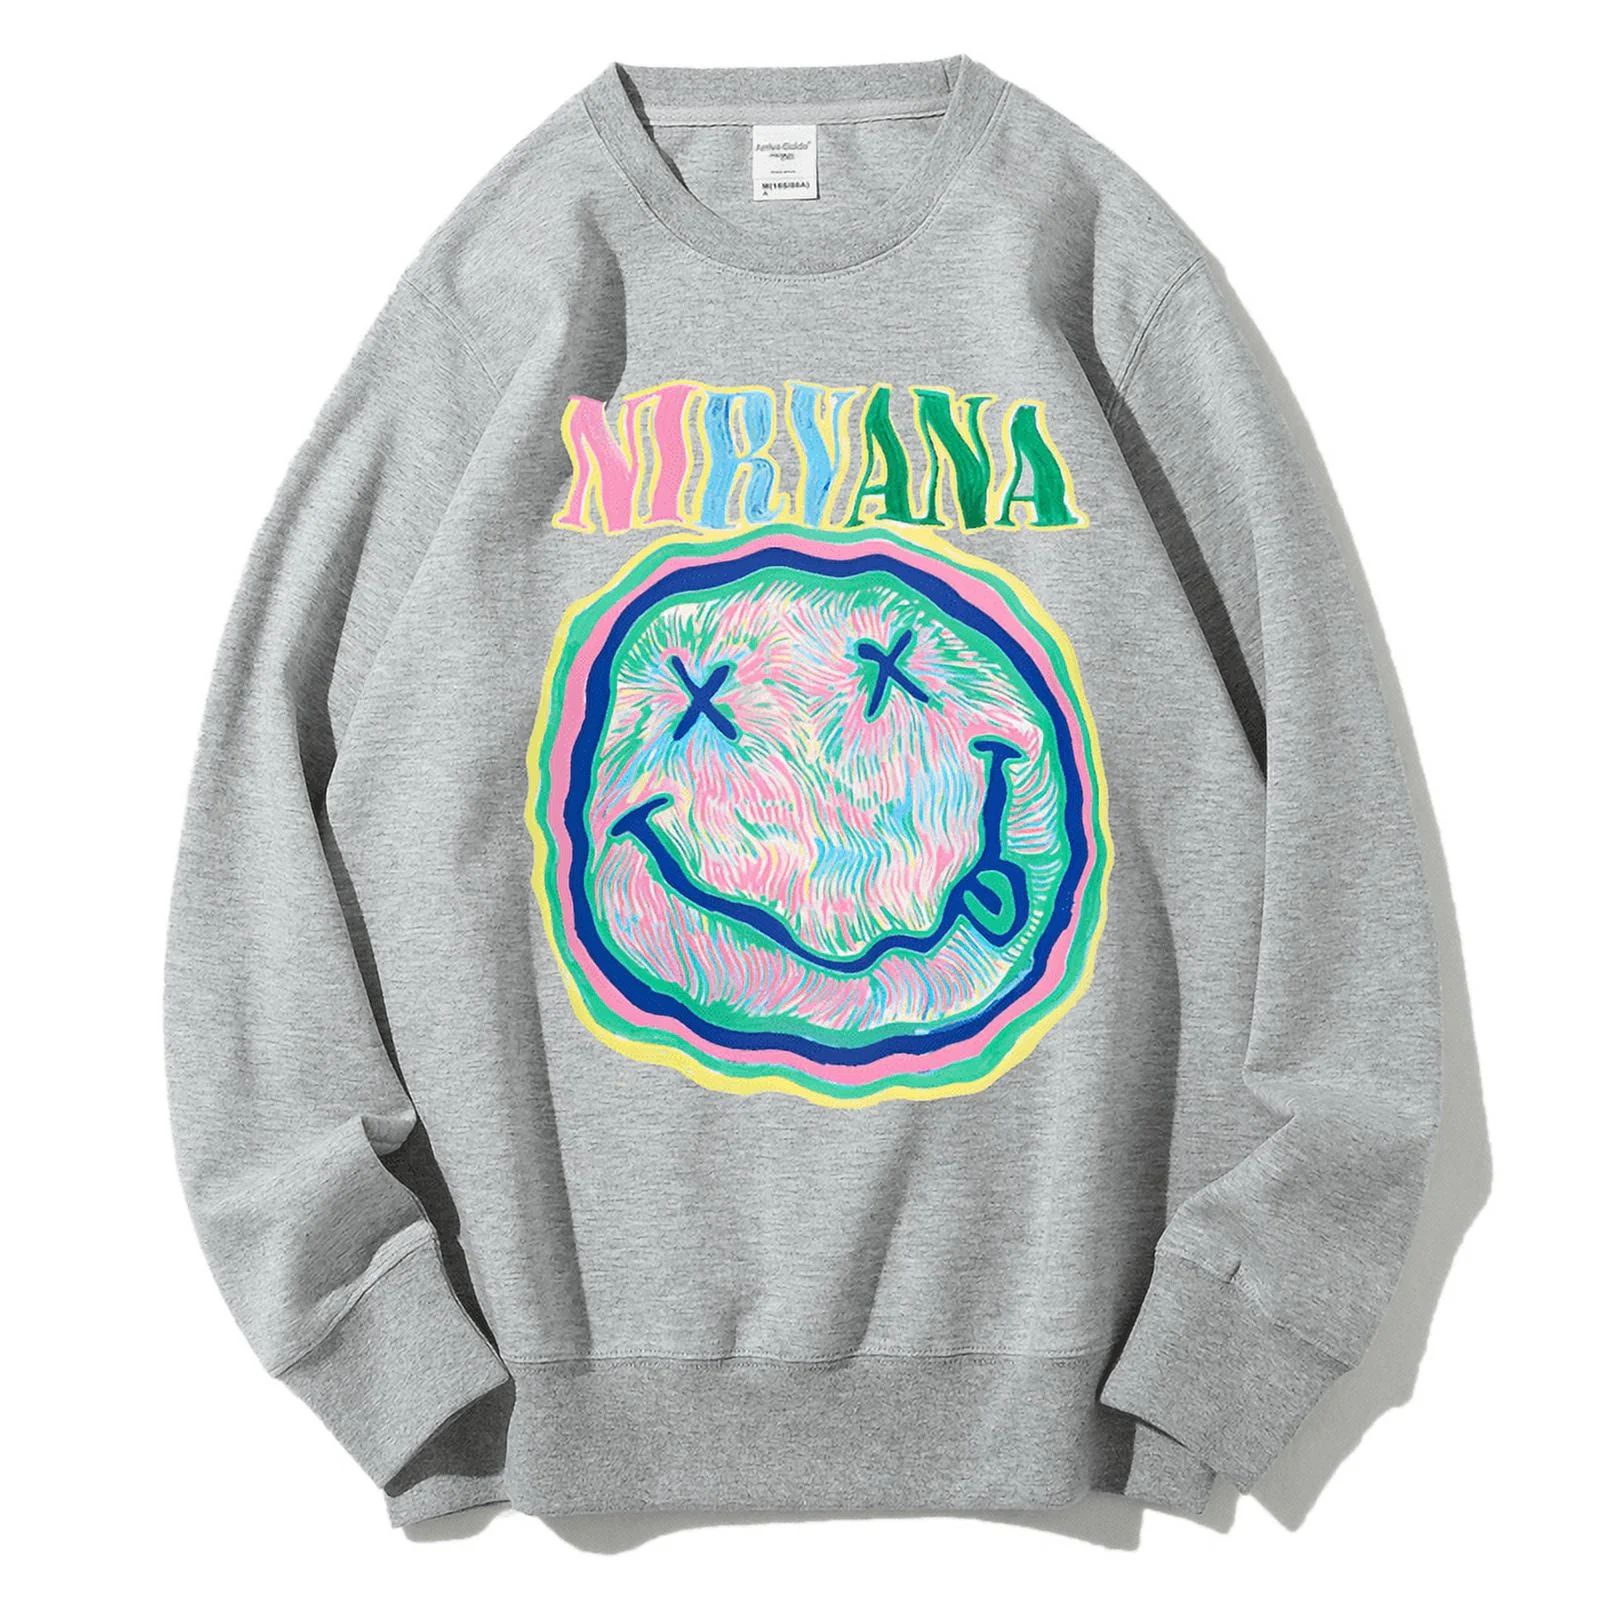 CustomMagic Unisex Nirvana Sweatshirt Smiley Face Print Casual Trendy Crewneck Long Sleeve Pullov... | Walmart (US)